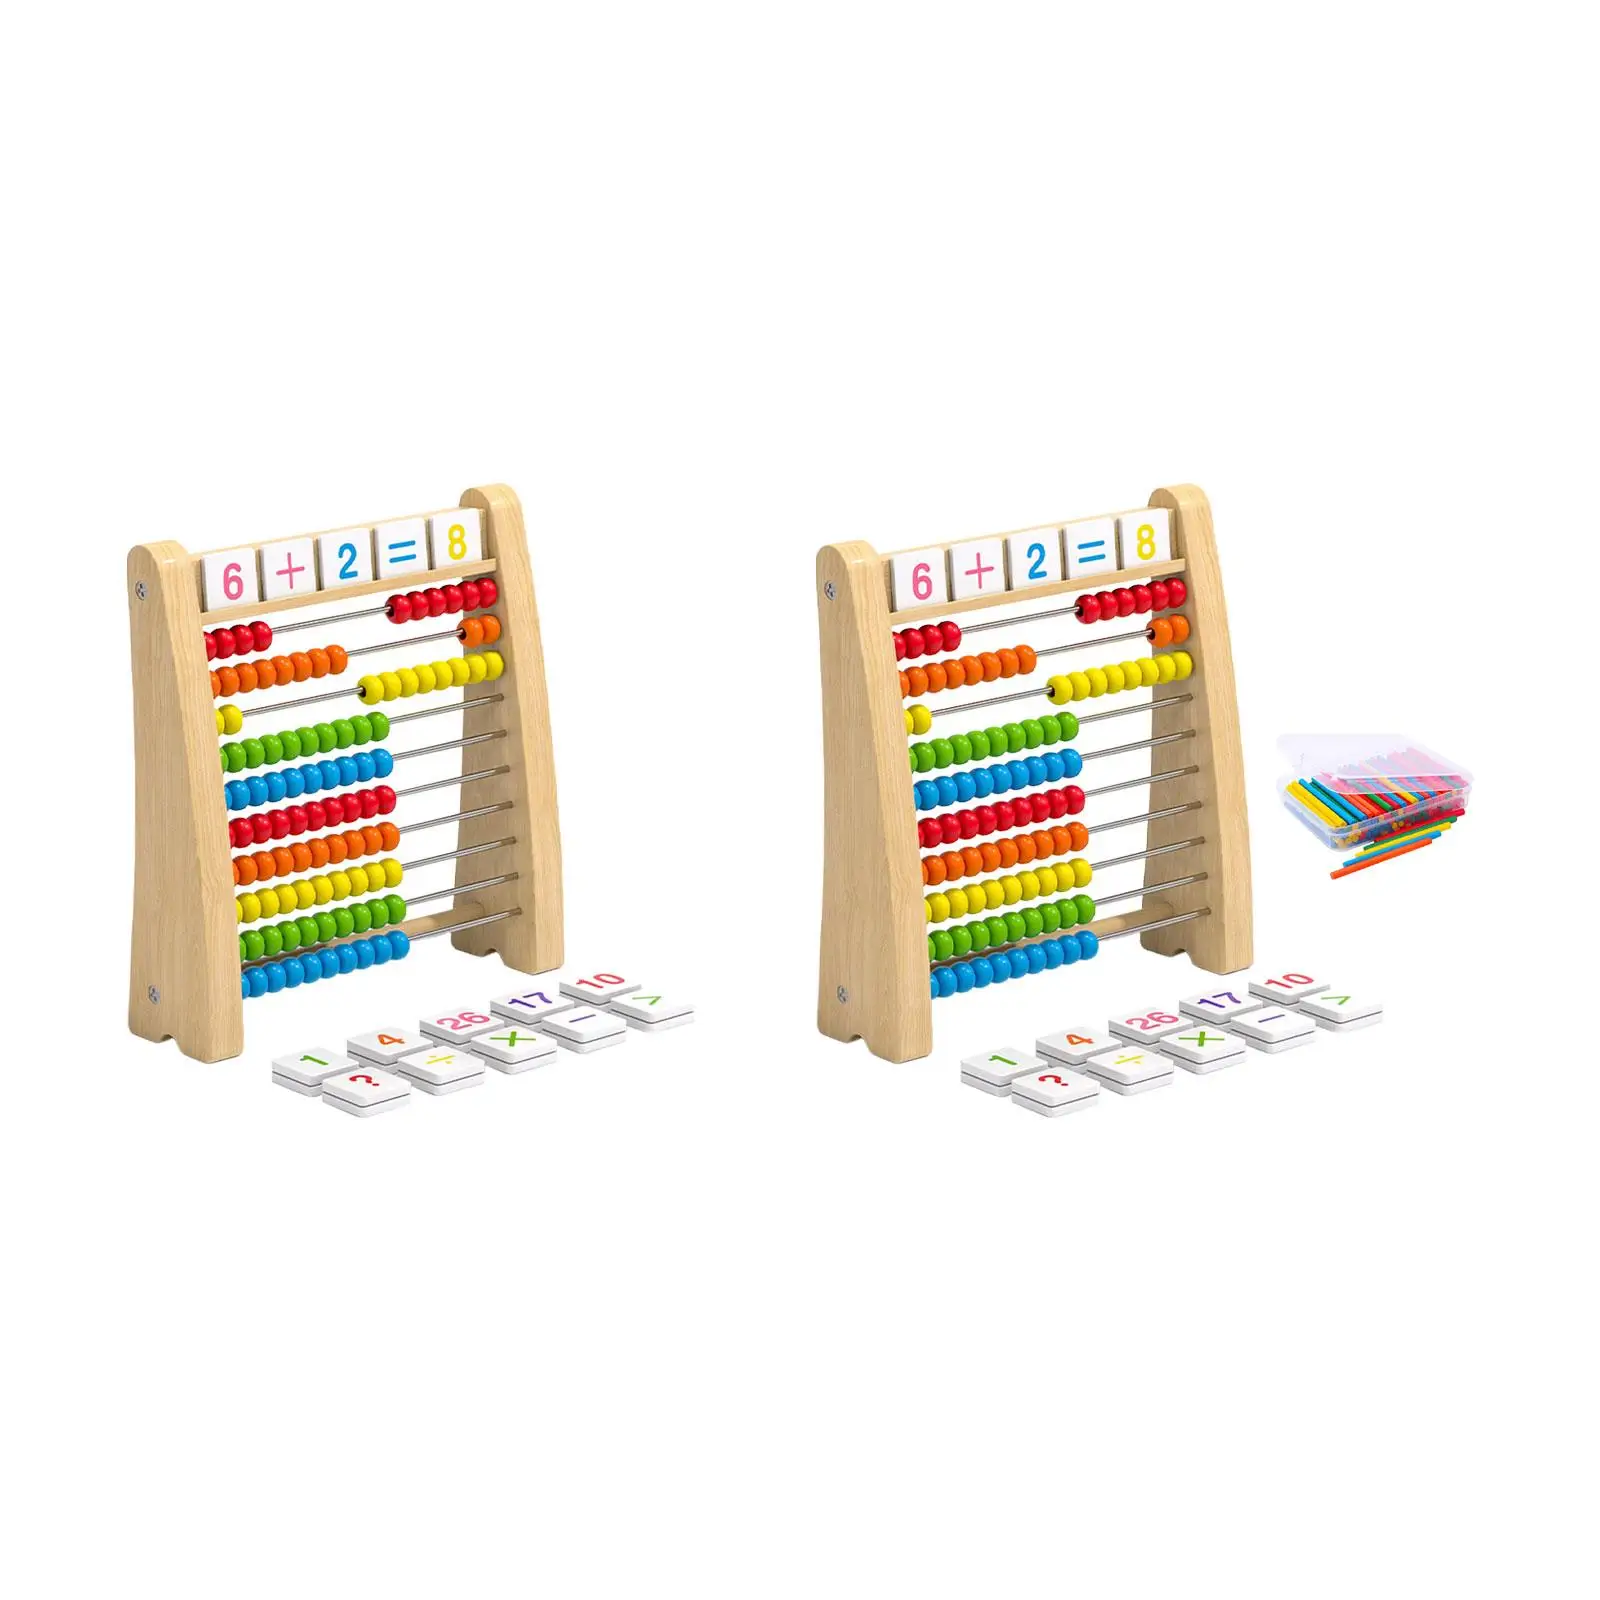 Add Subtract Abacus Ten Frame Set Math Manipulatives for Children Elementary